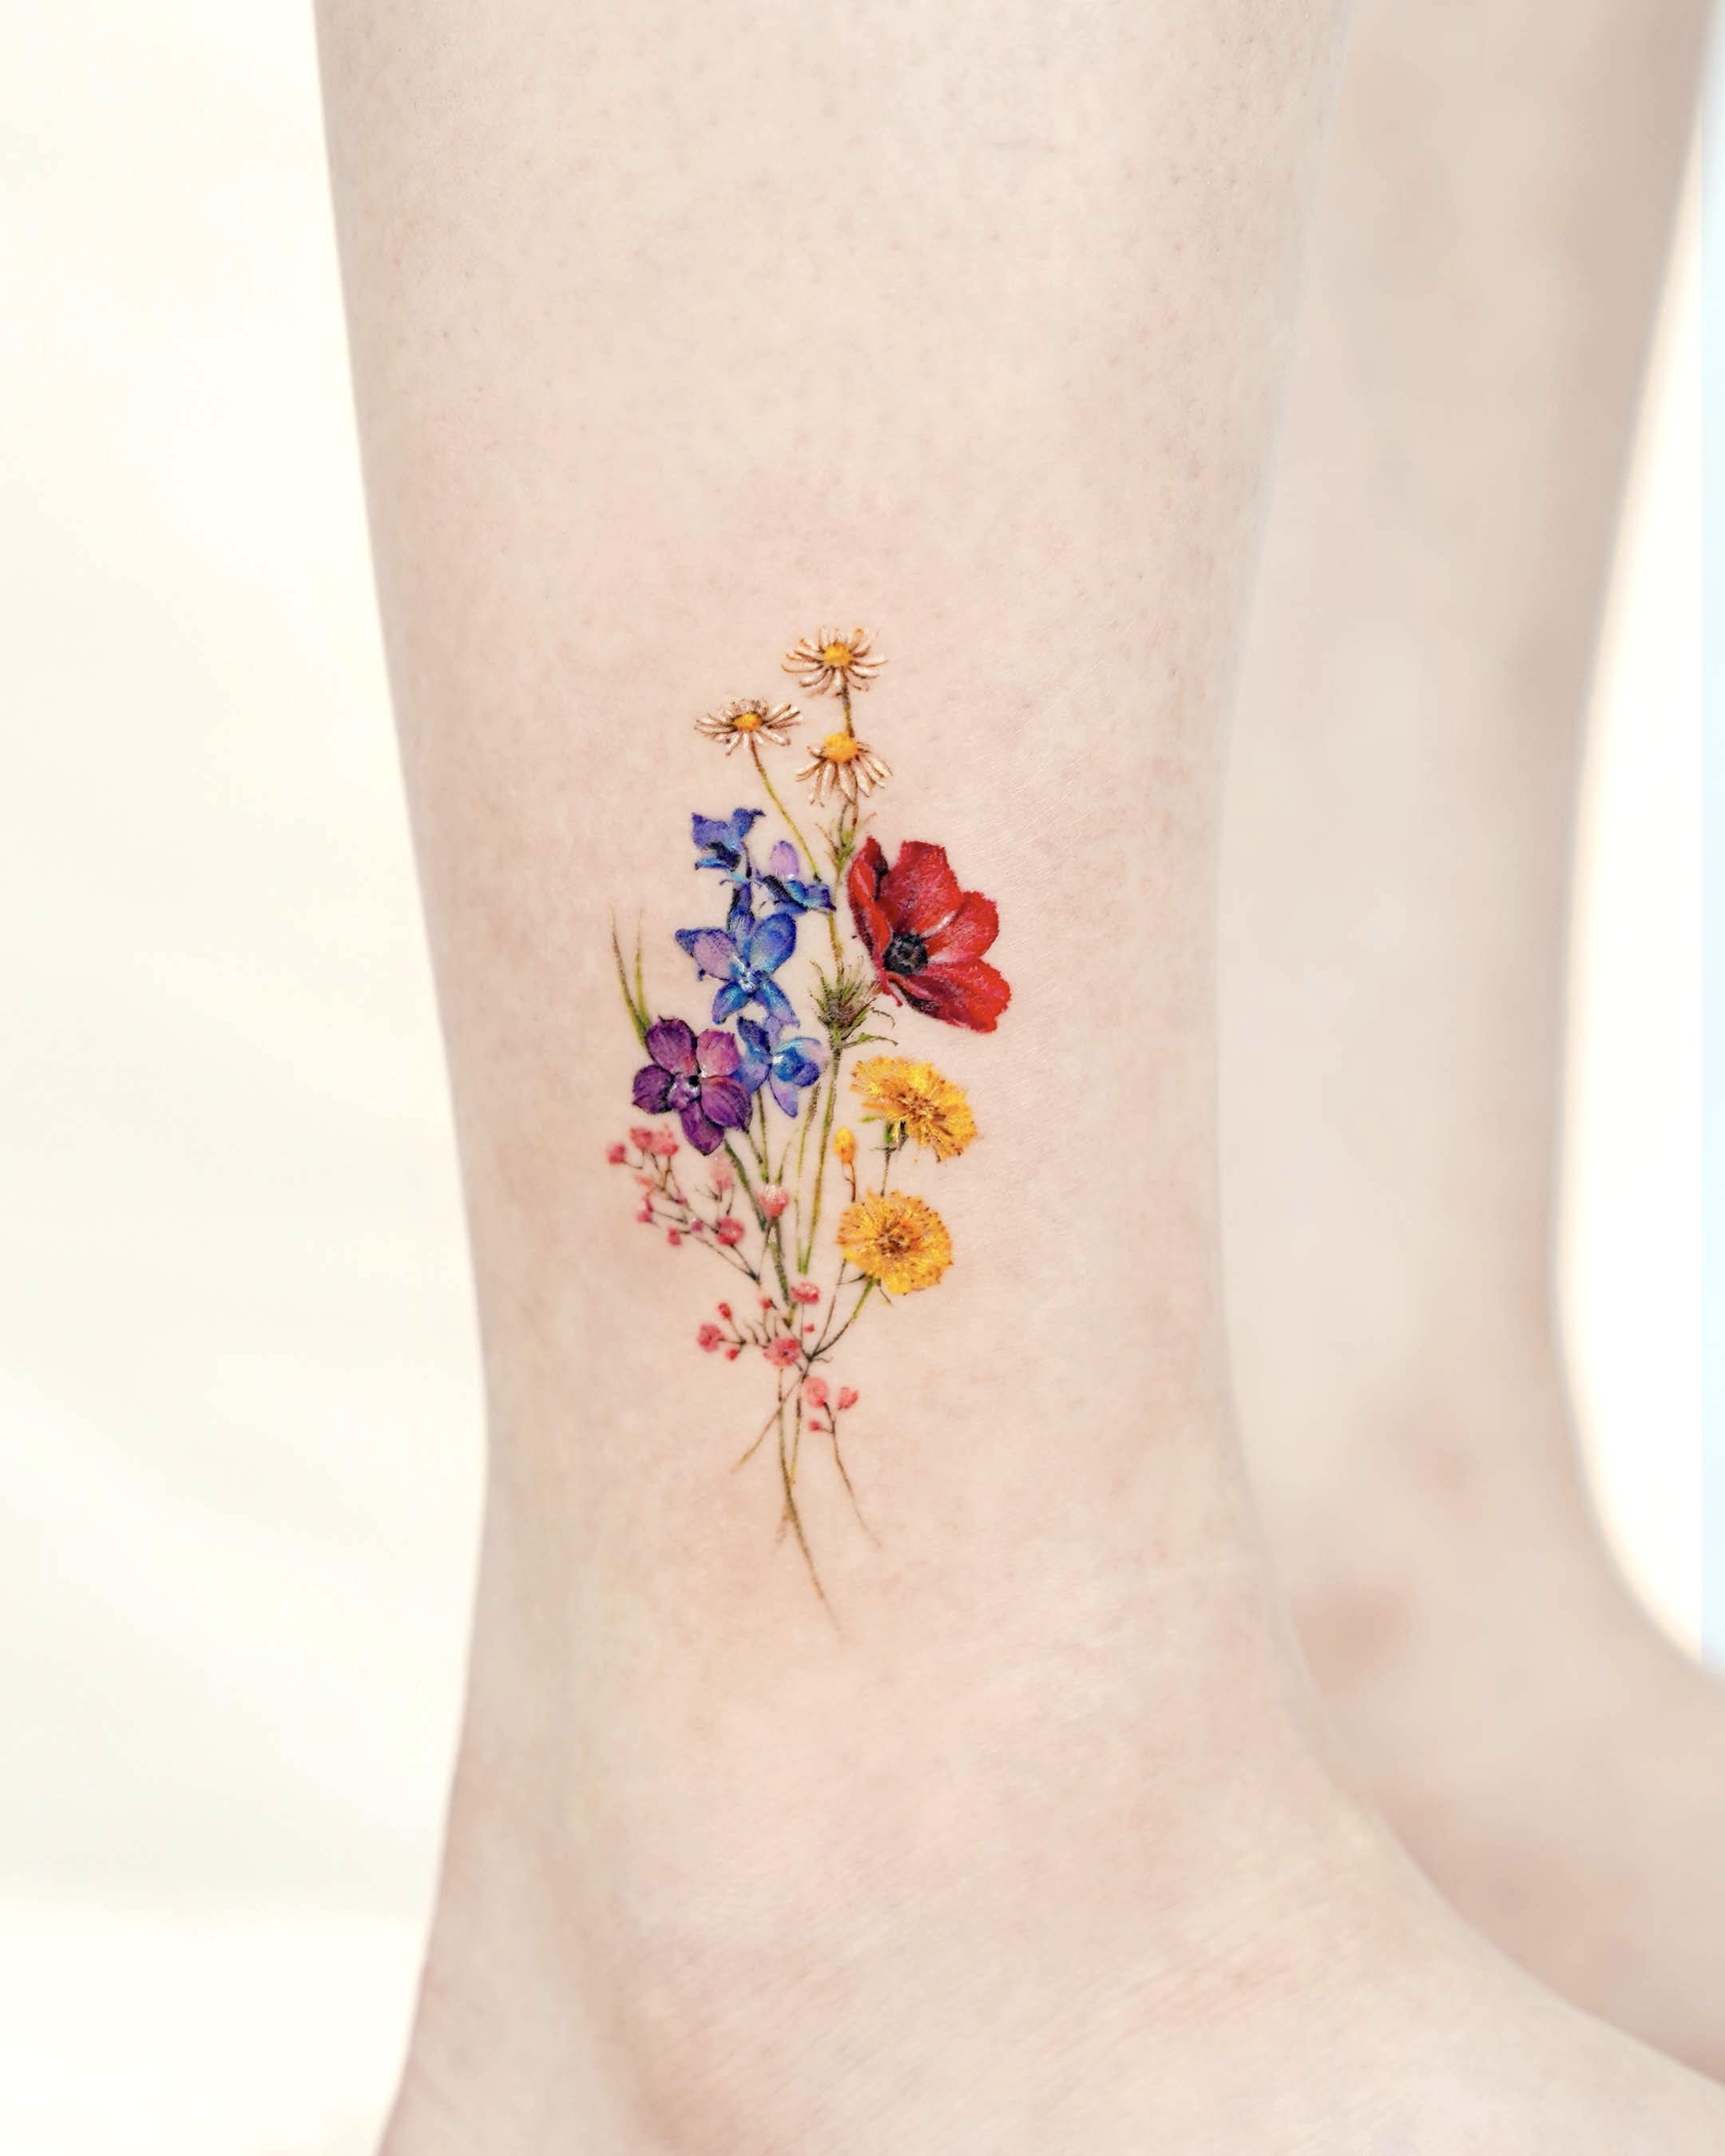 5 Popular Tattoo Designs In Korea According To A Tattoo Artist